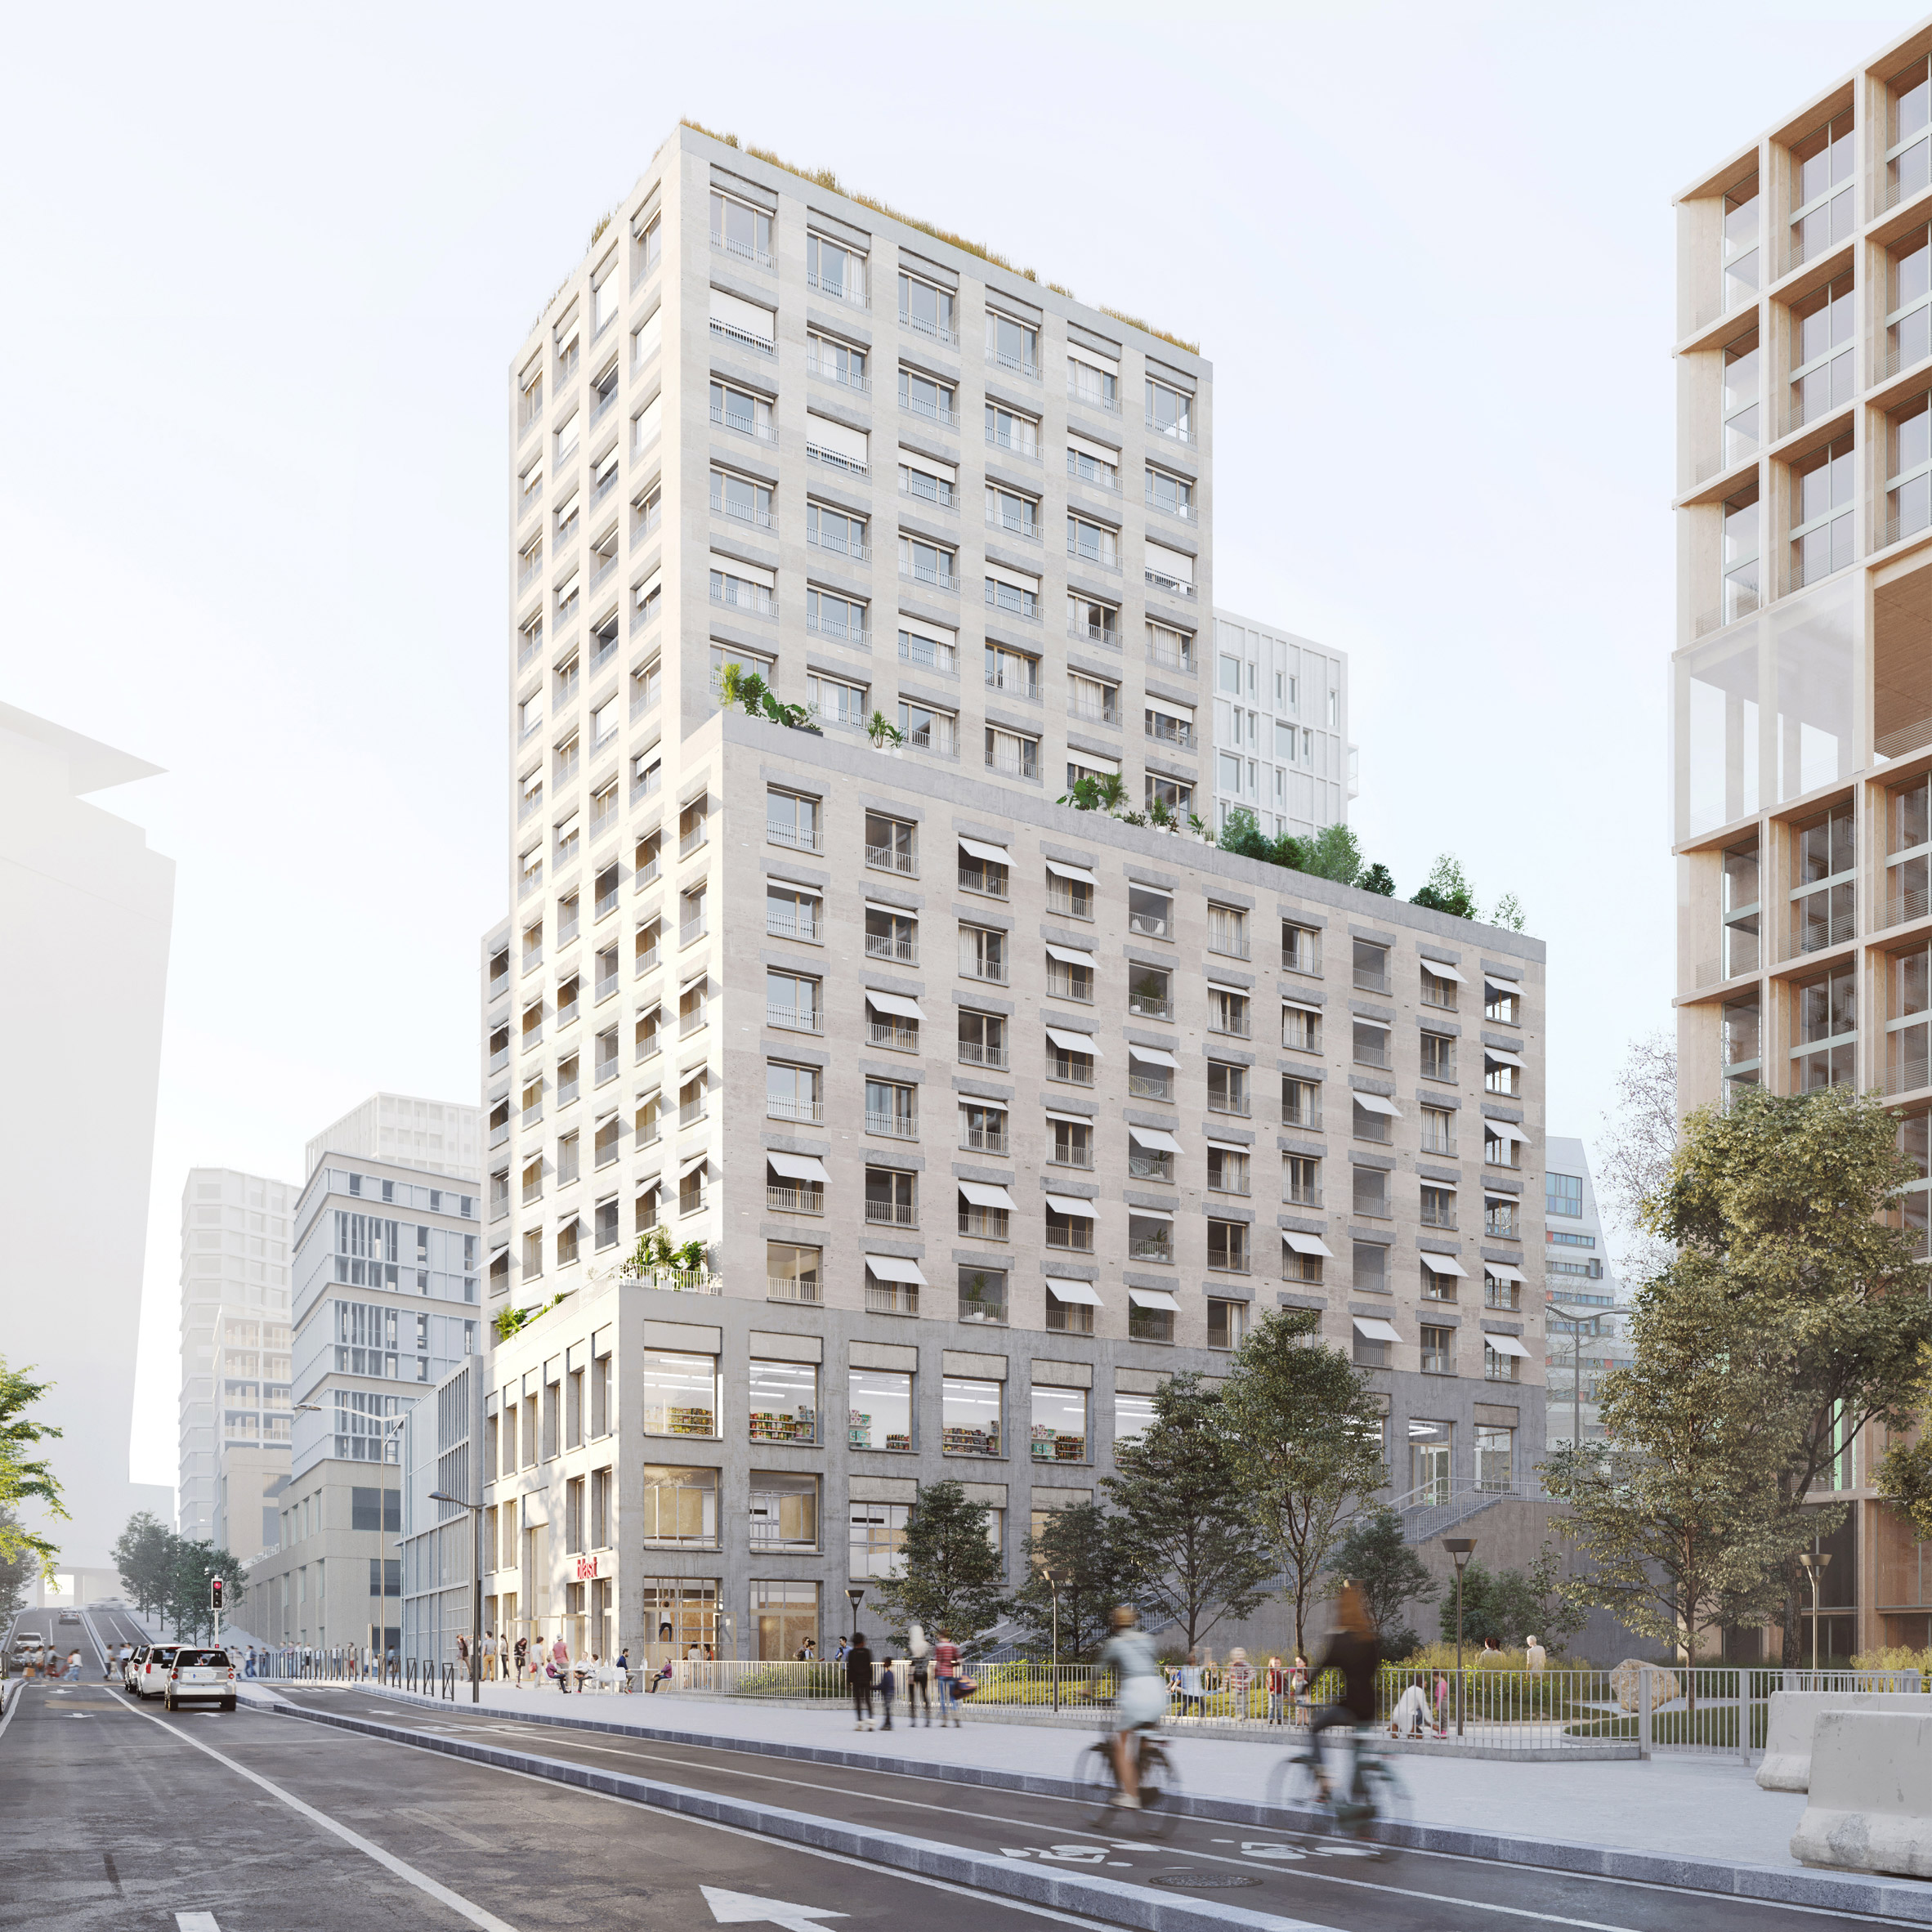 Facade visualisation of 58 Apartments in Paris by Barrault Pressacco